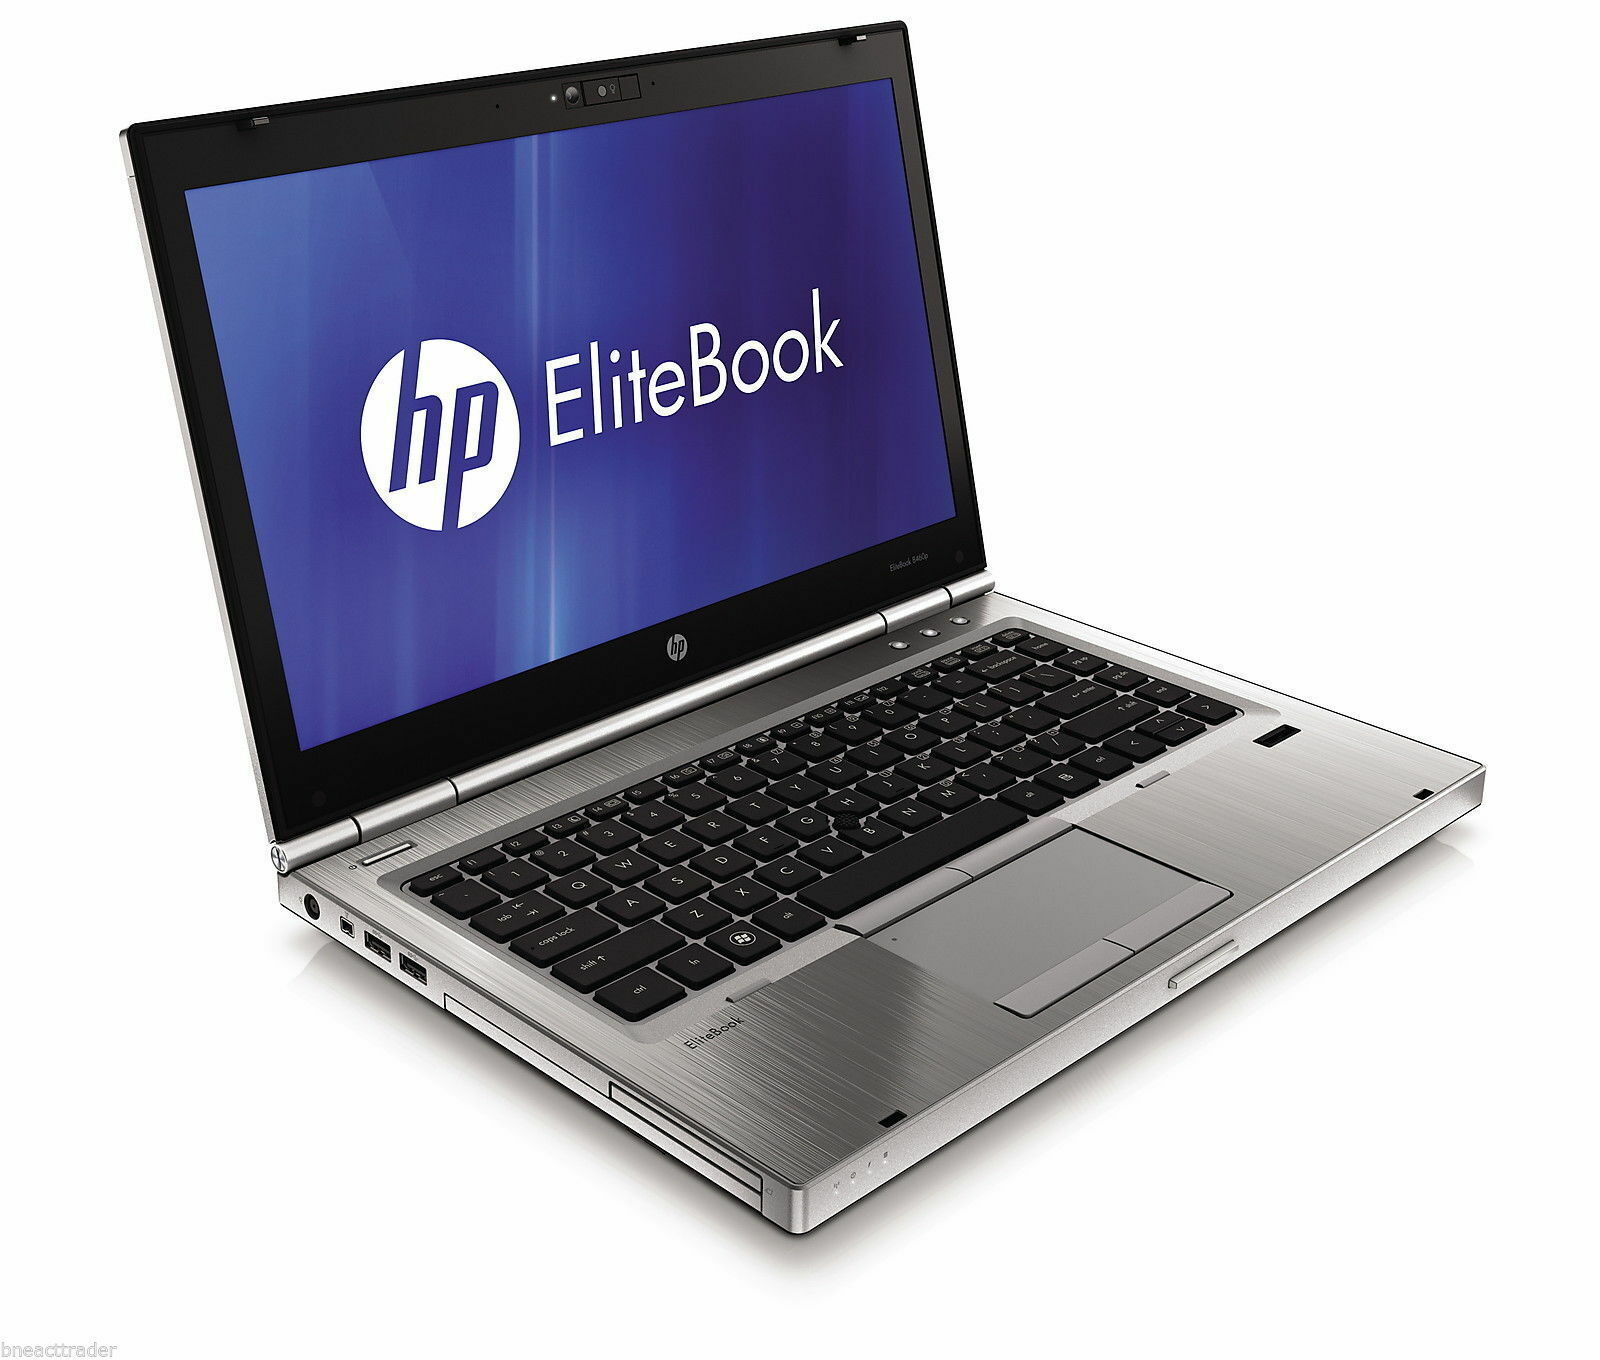 HP EliteBook 8460p Intel i7 2720QM 2.20GHz 4GB RAM 256GB SSD 14" NO OS Full Size Image